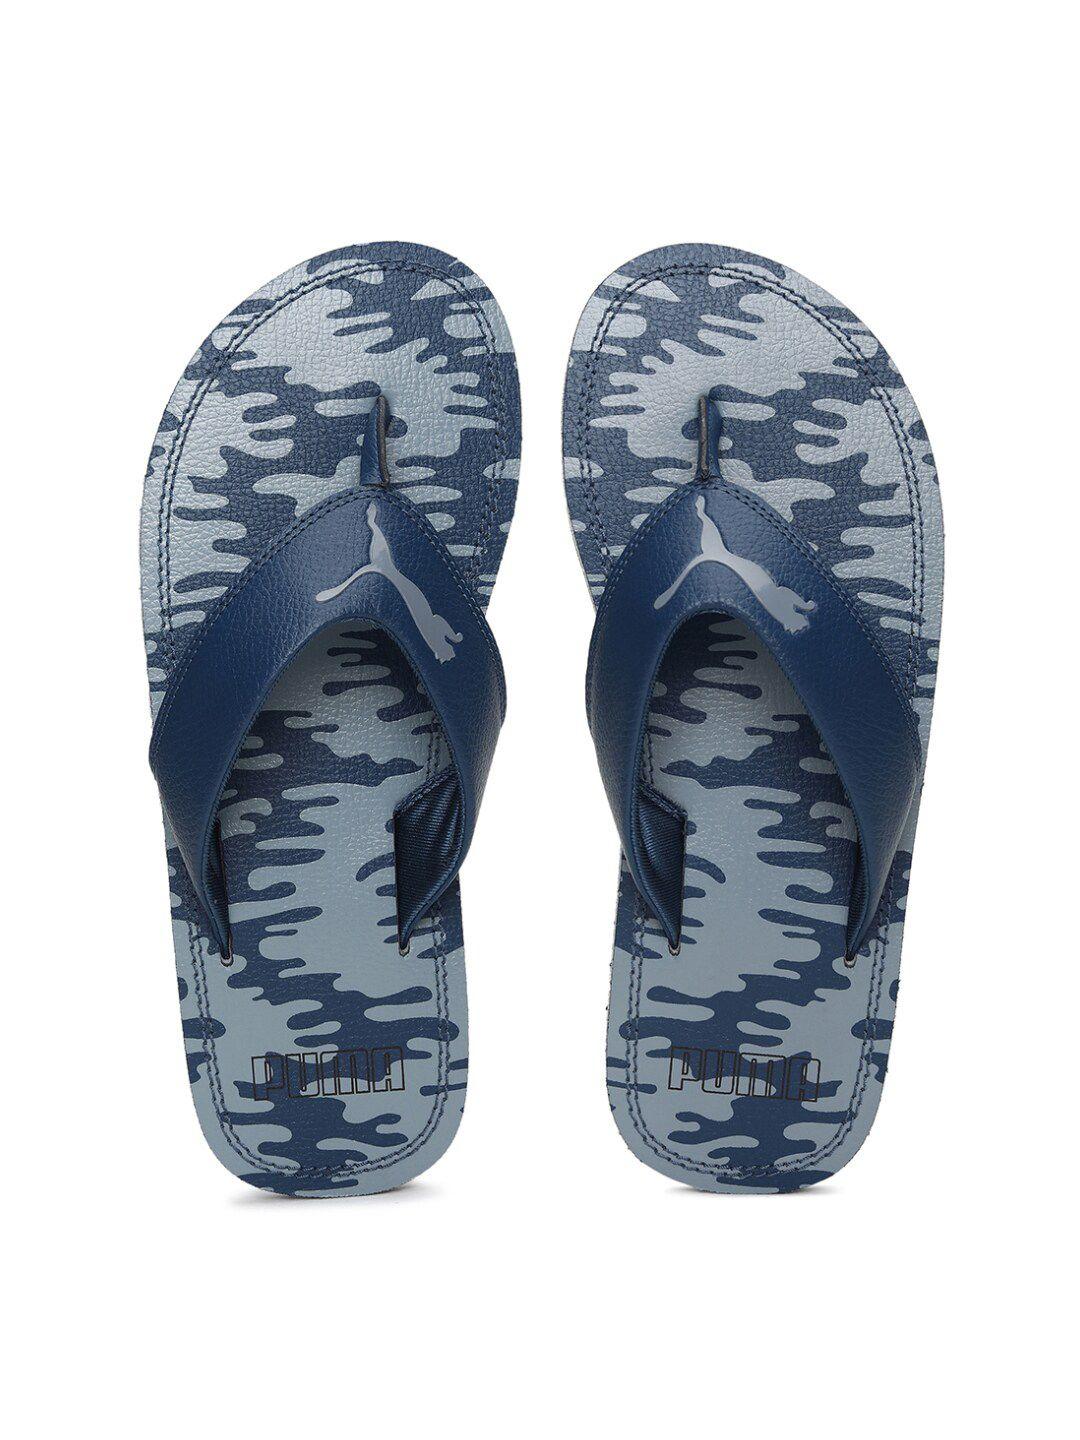 puma-men-blue-&-grey-colourblocked-thong-flip-flops